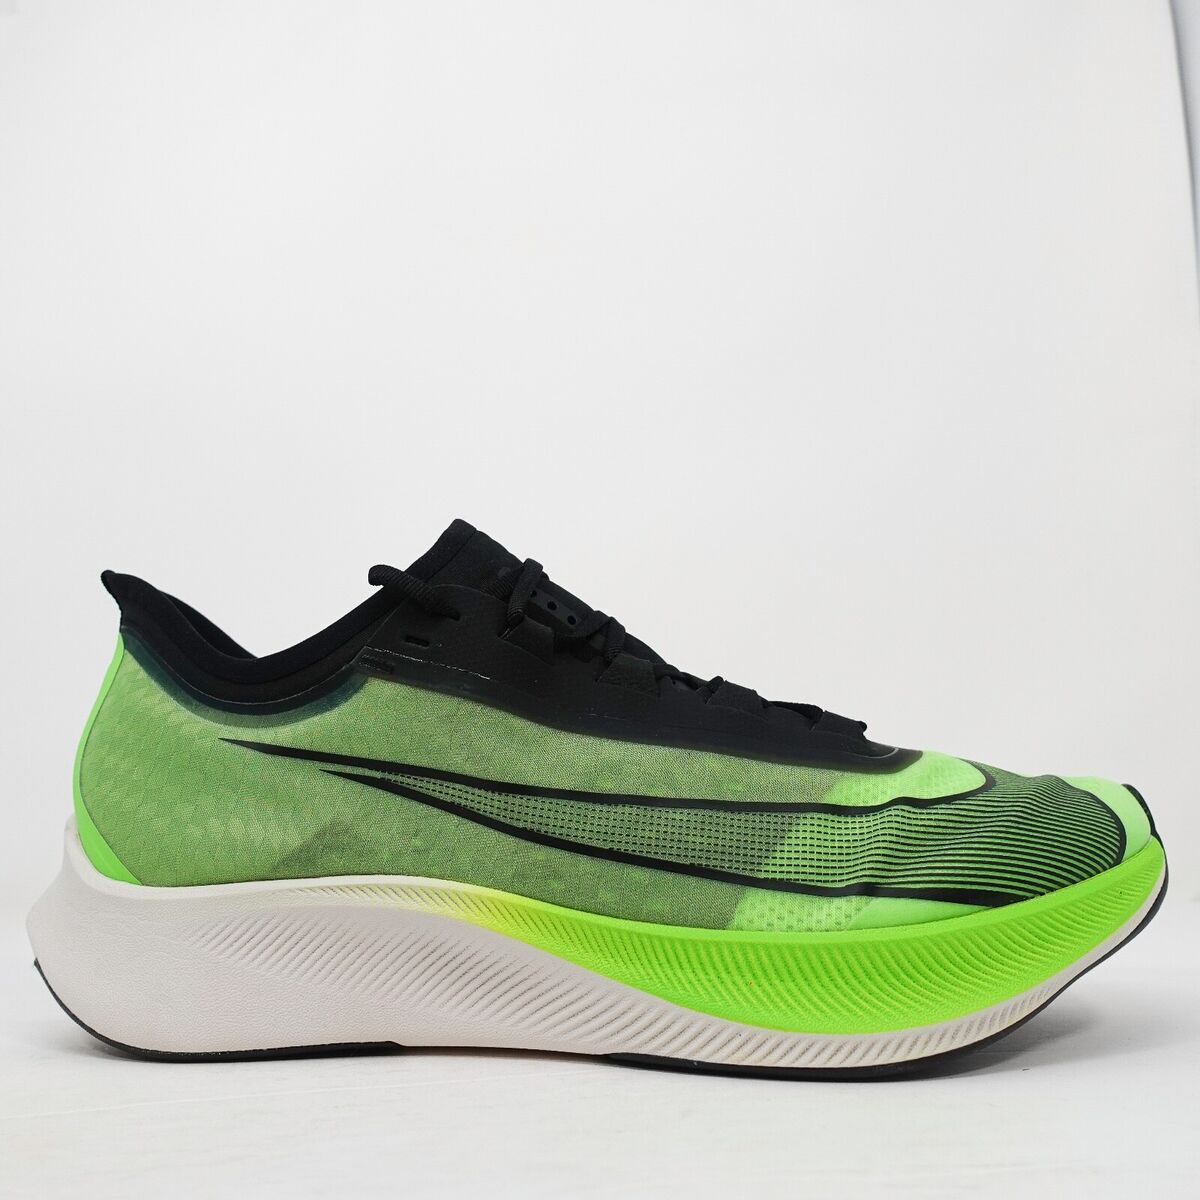 Consulado Pareja Lugar de la noche Nike Zoom Fly 3 Vapor Weave Running Shoes Electric Green AT8240-300 Mens  Size 14 | eBay